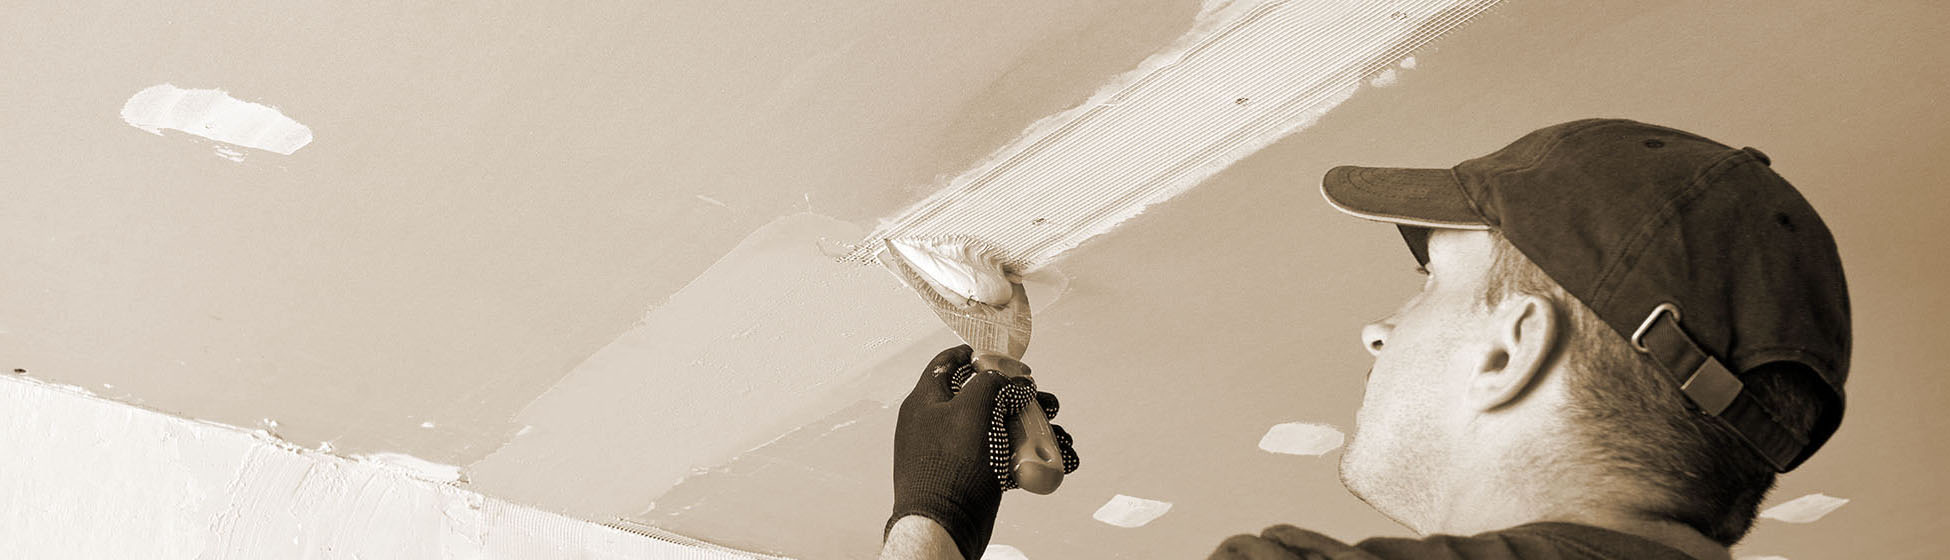 Reparer faux plafond